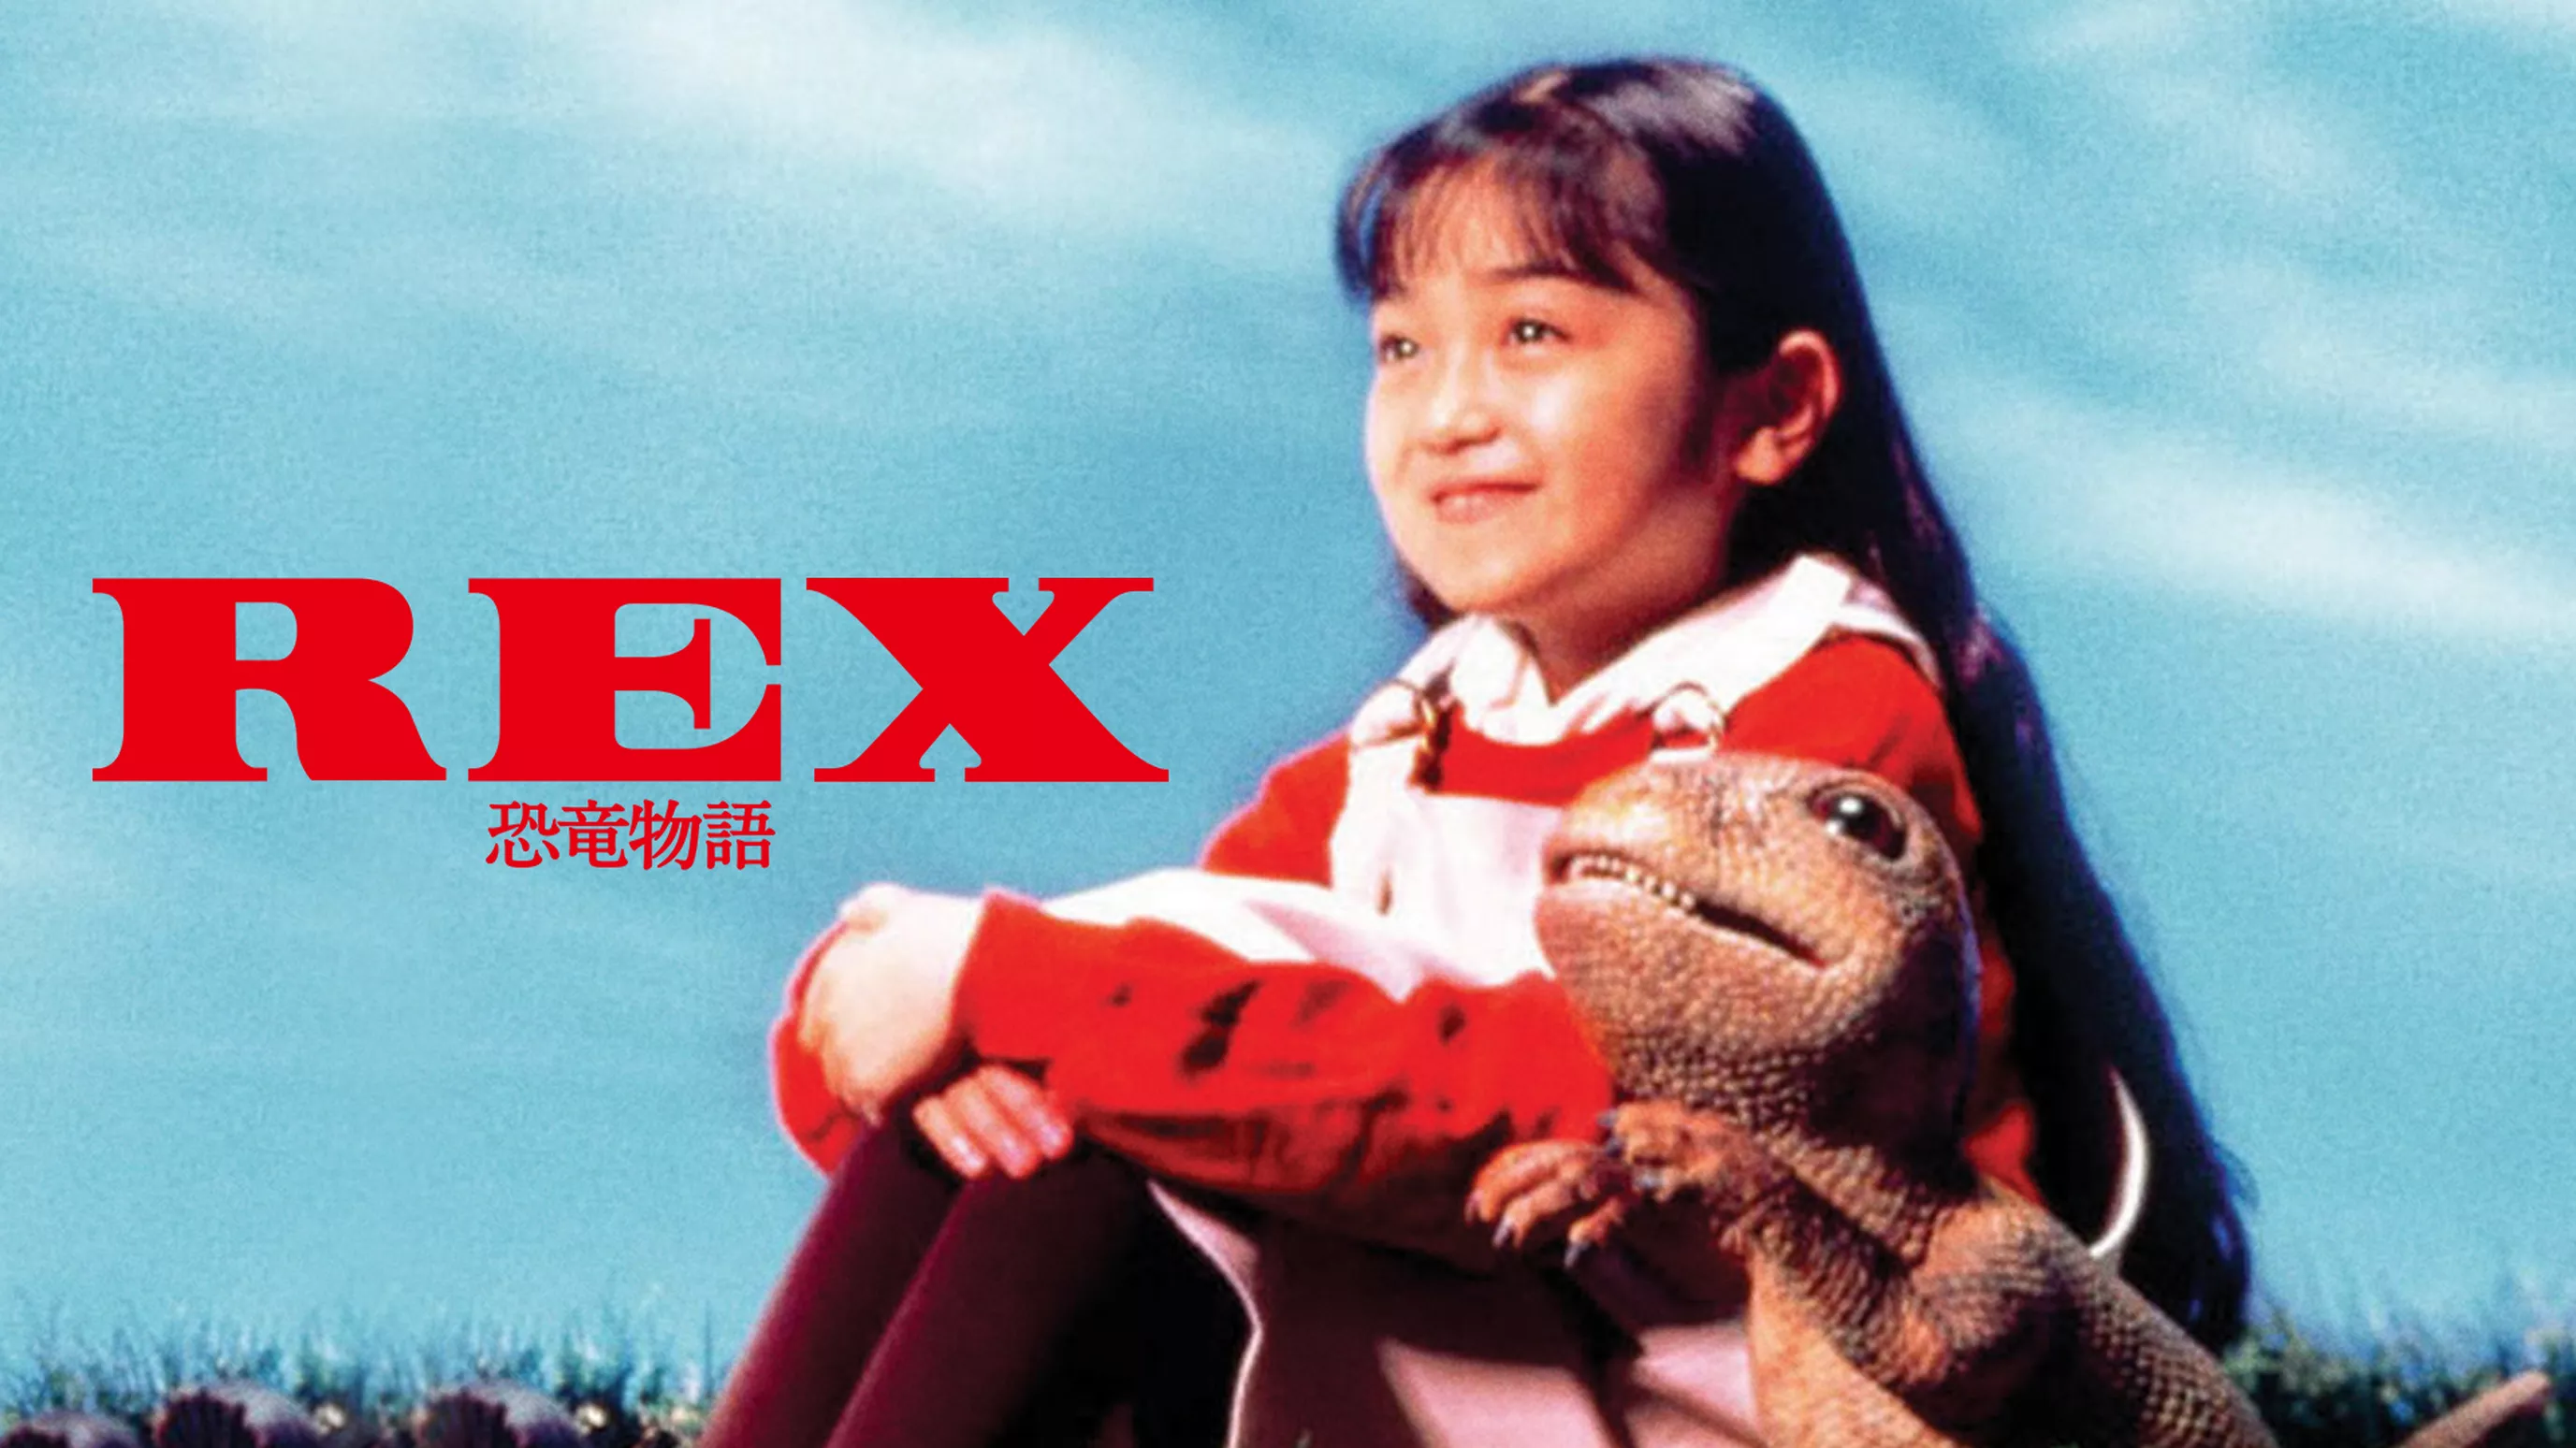 REX恐竜物語　デジタル・リマスター版 [DVD] g6bh9ry